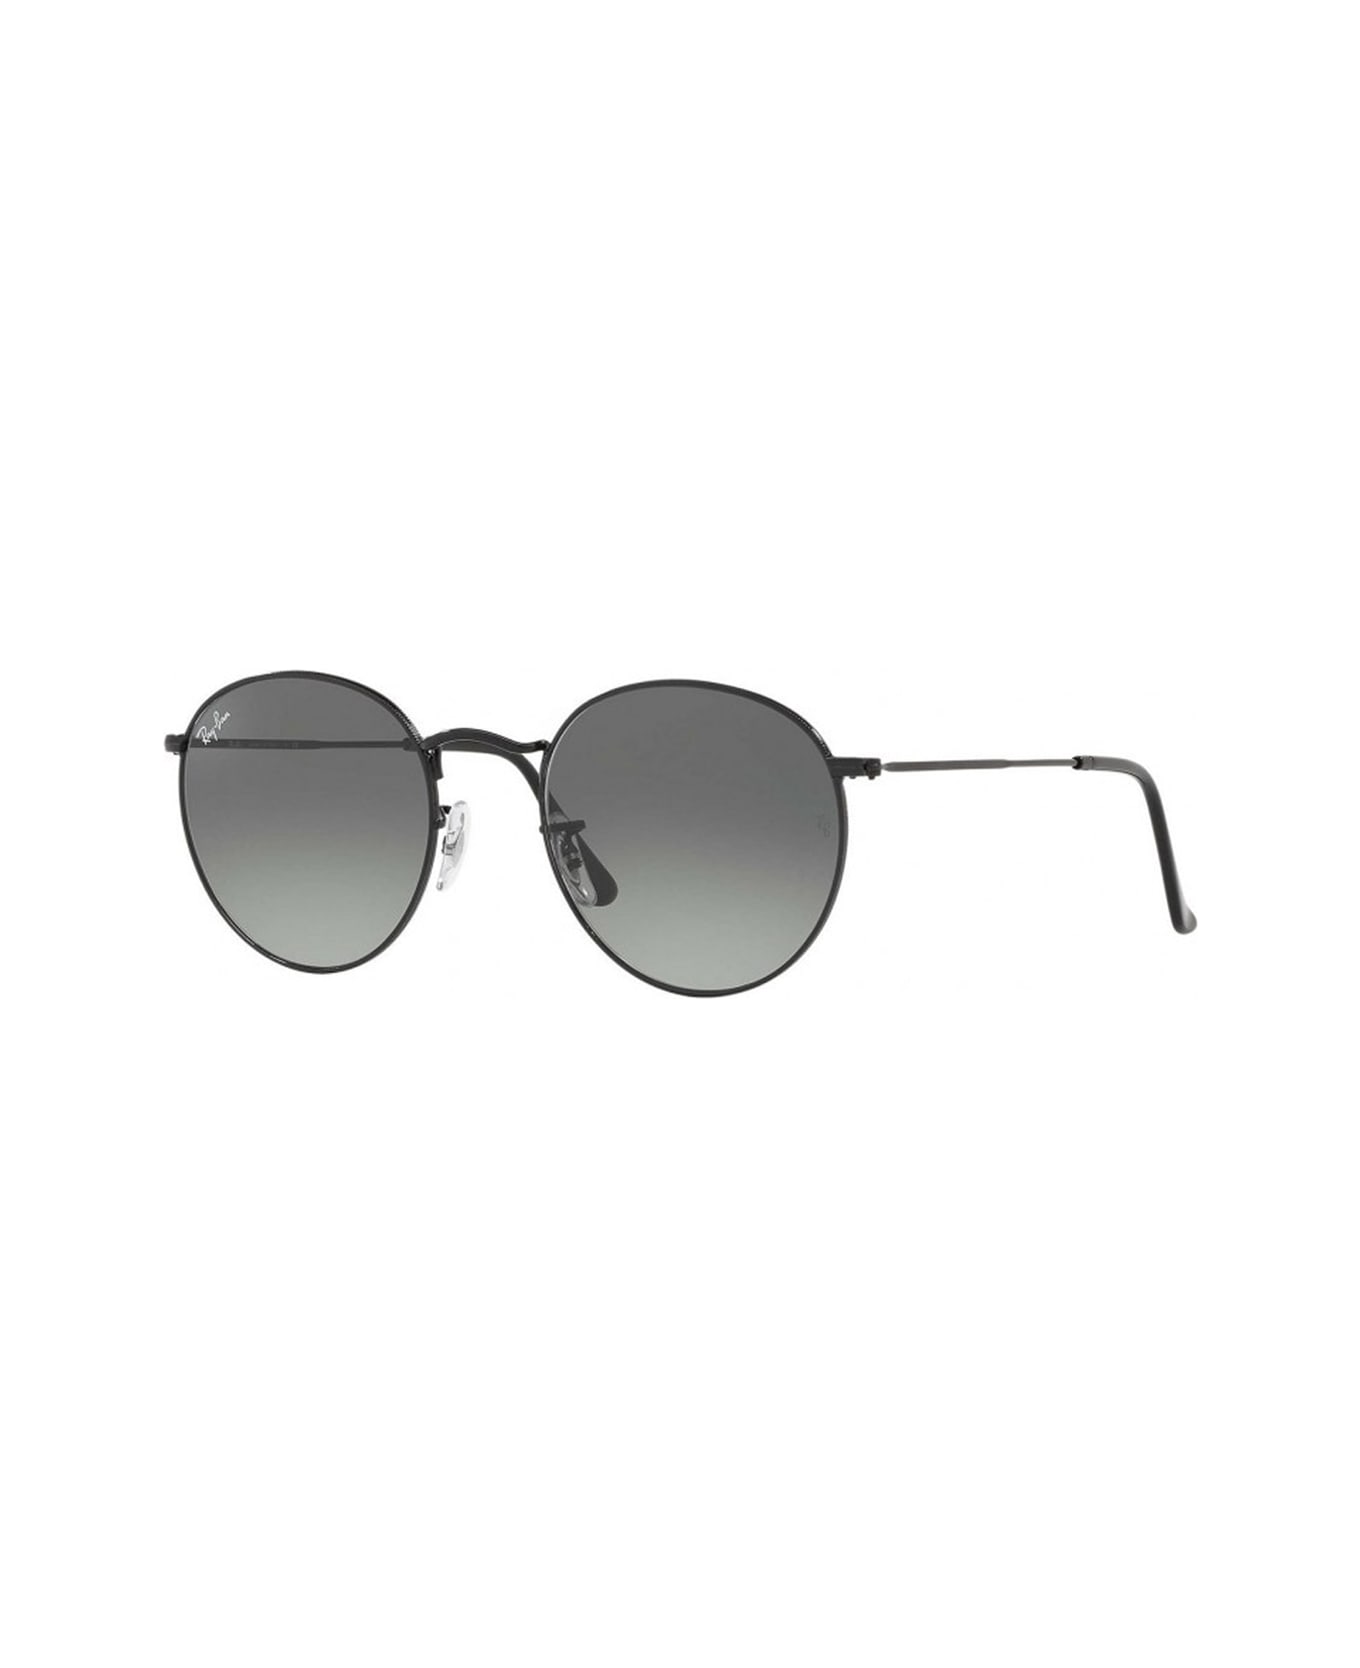 Ray-Ban Rb3447n 002/71 Sunglasses - Nero サングラス